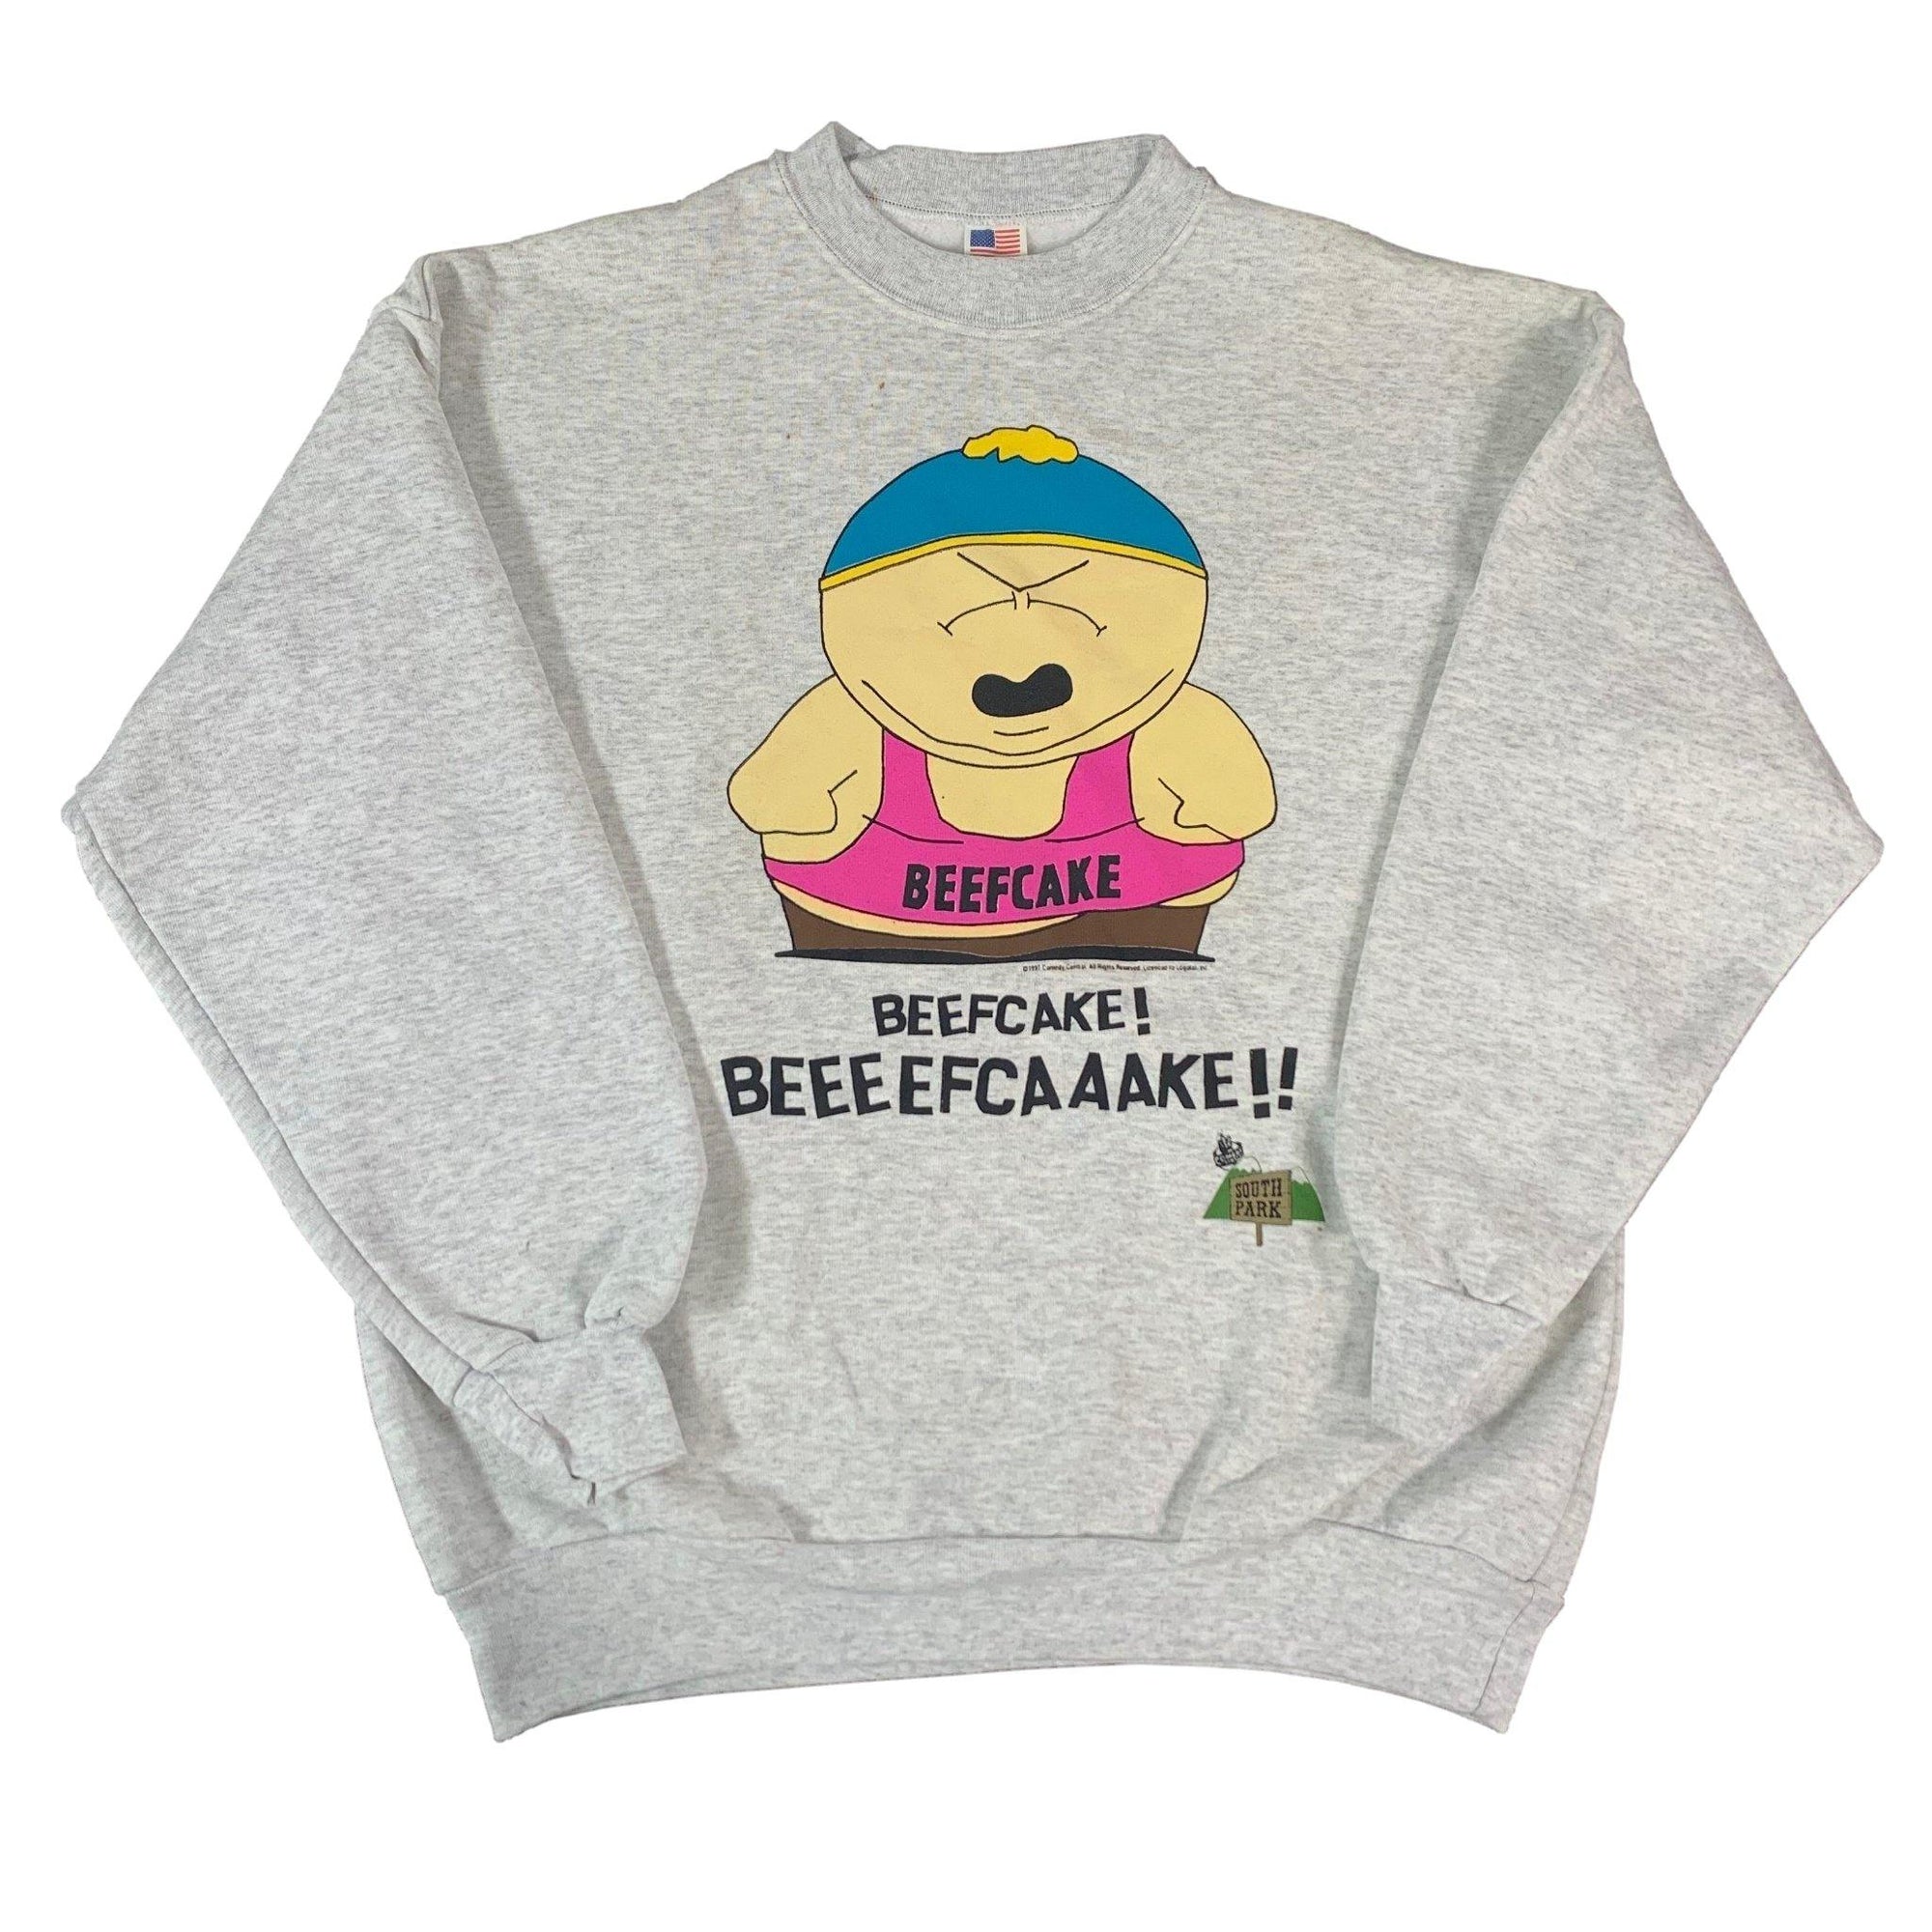 Vintage South Park "Beefcake" Crewneck Sweatshirt - jointcustodydc